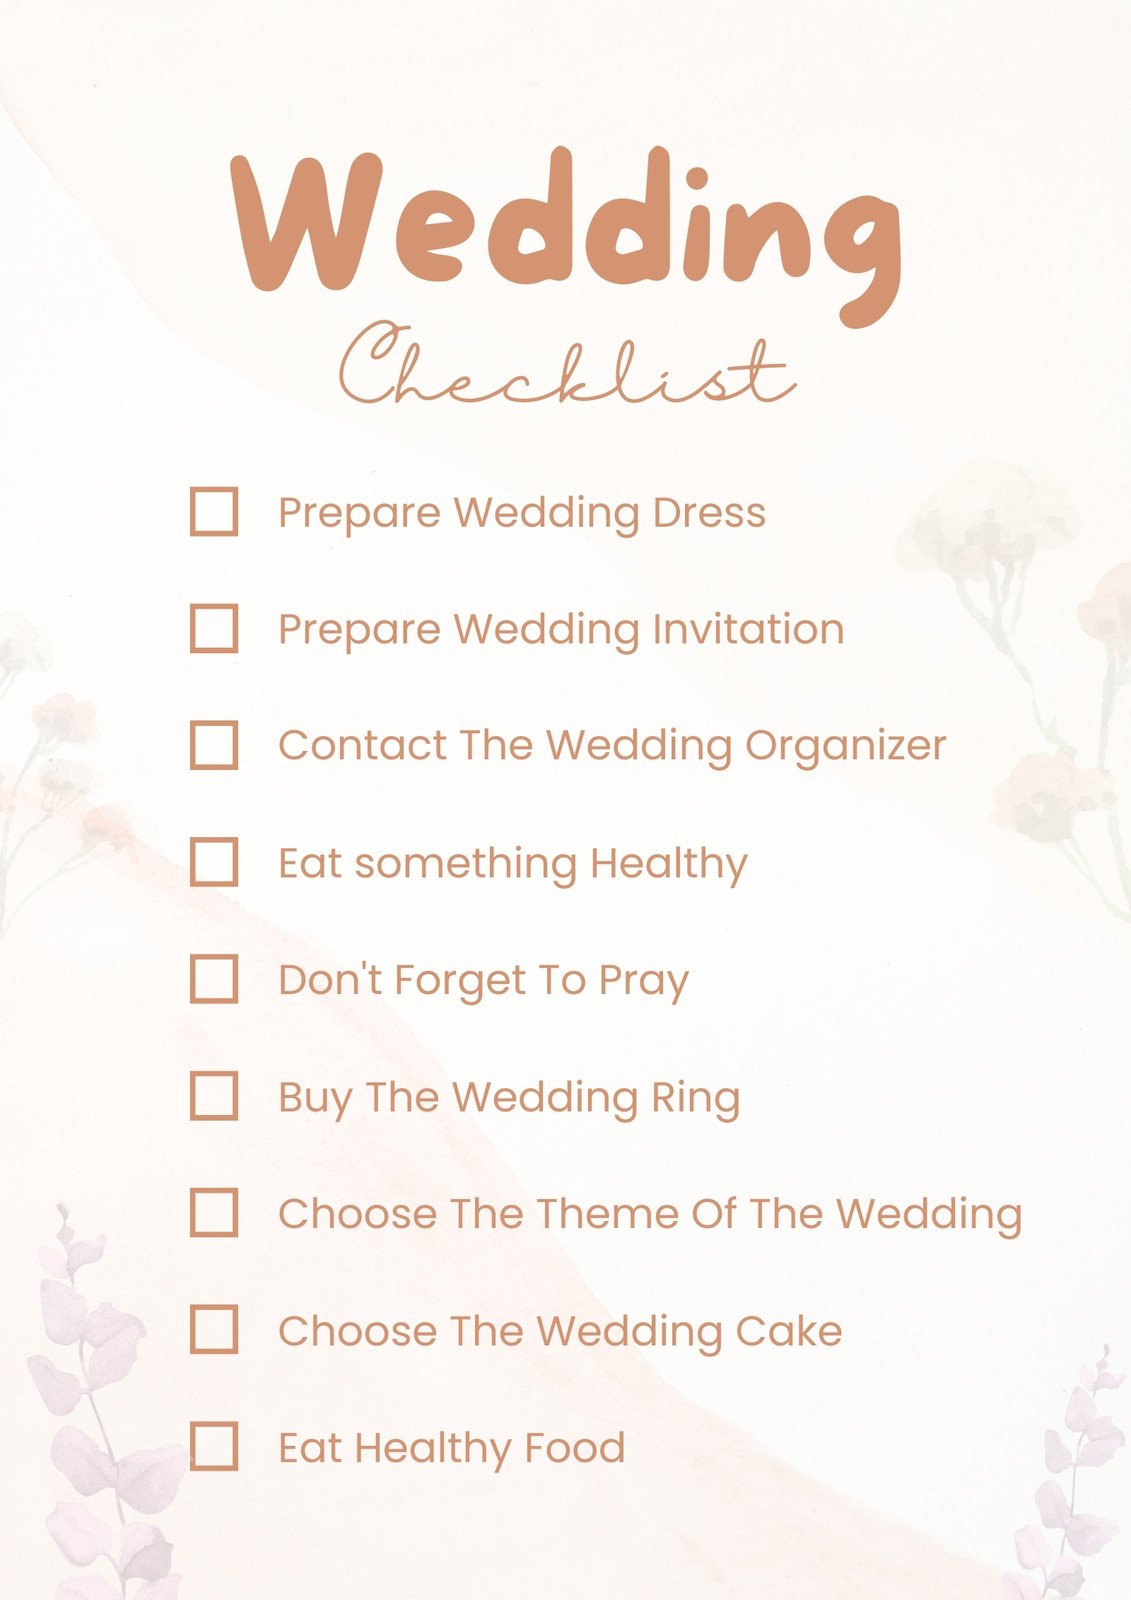 Customize 116+ Wedding Checklist Templates Online - Canva